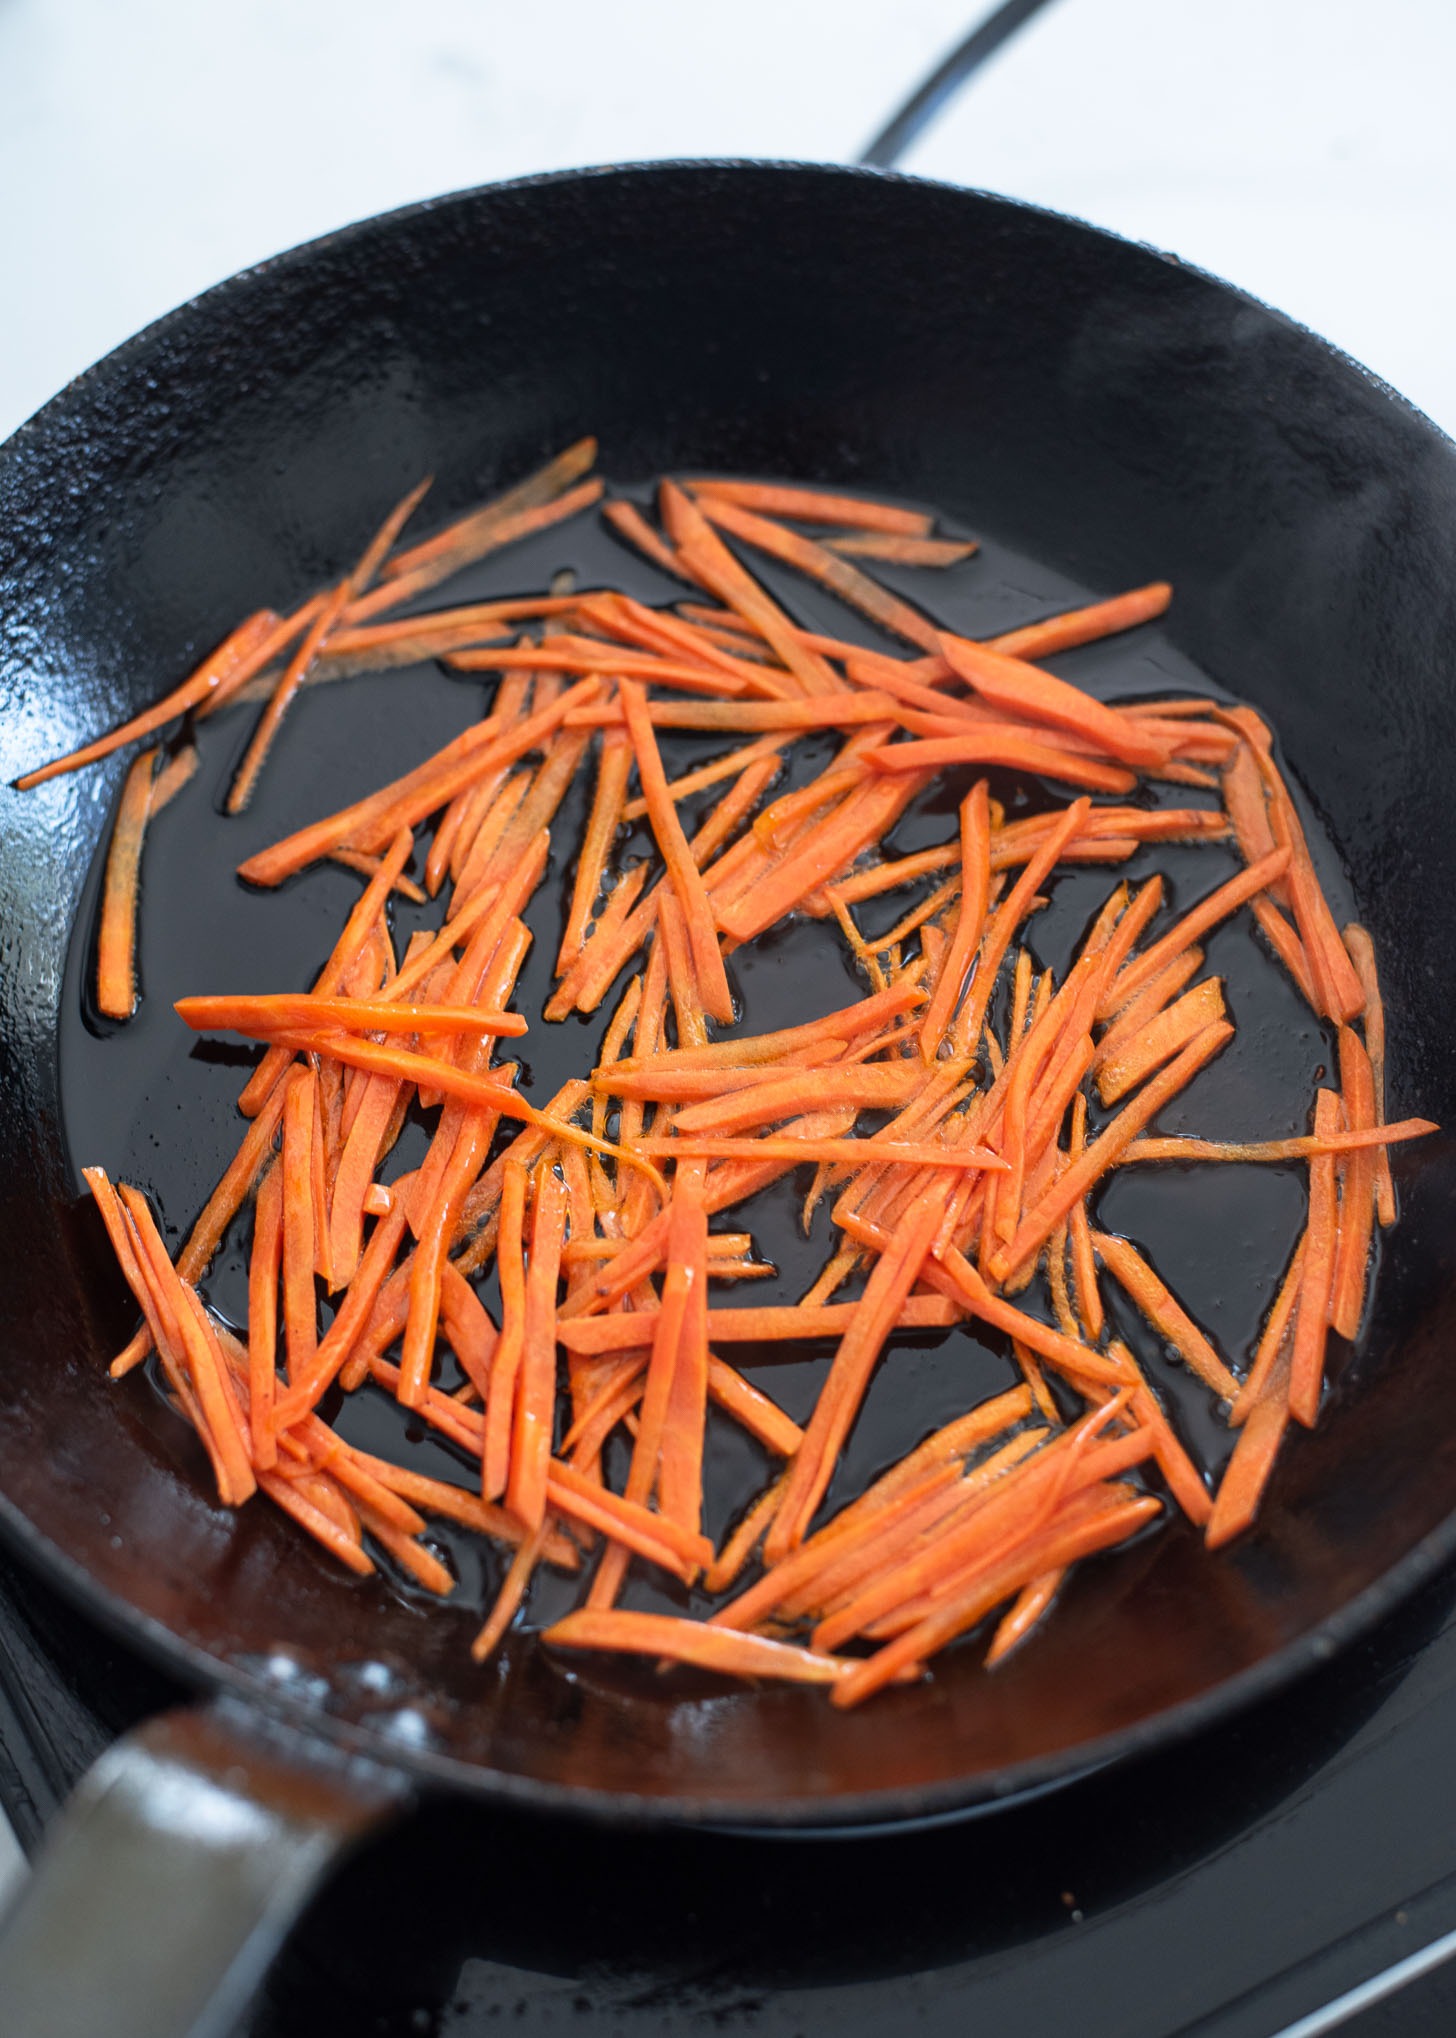 Shredded carrots stir frying to make crispy chili beef.